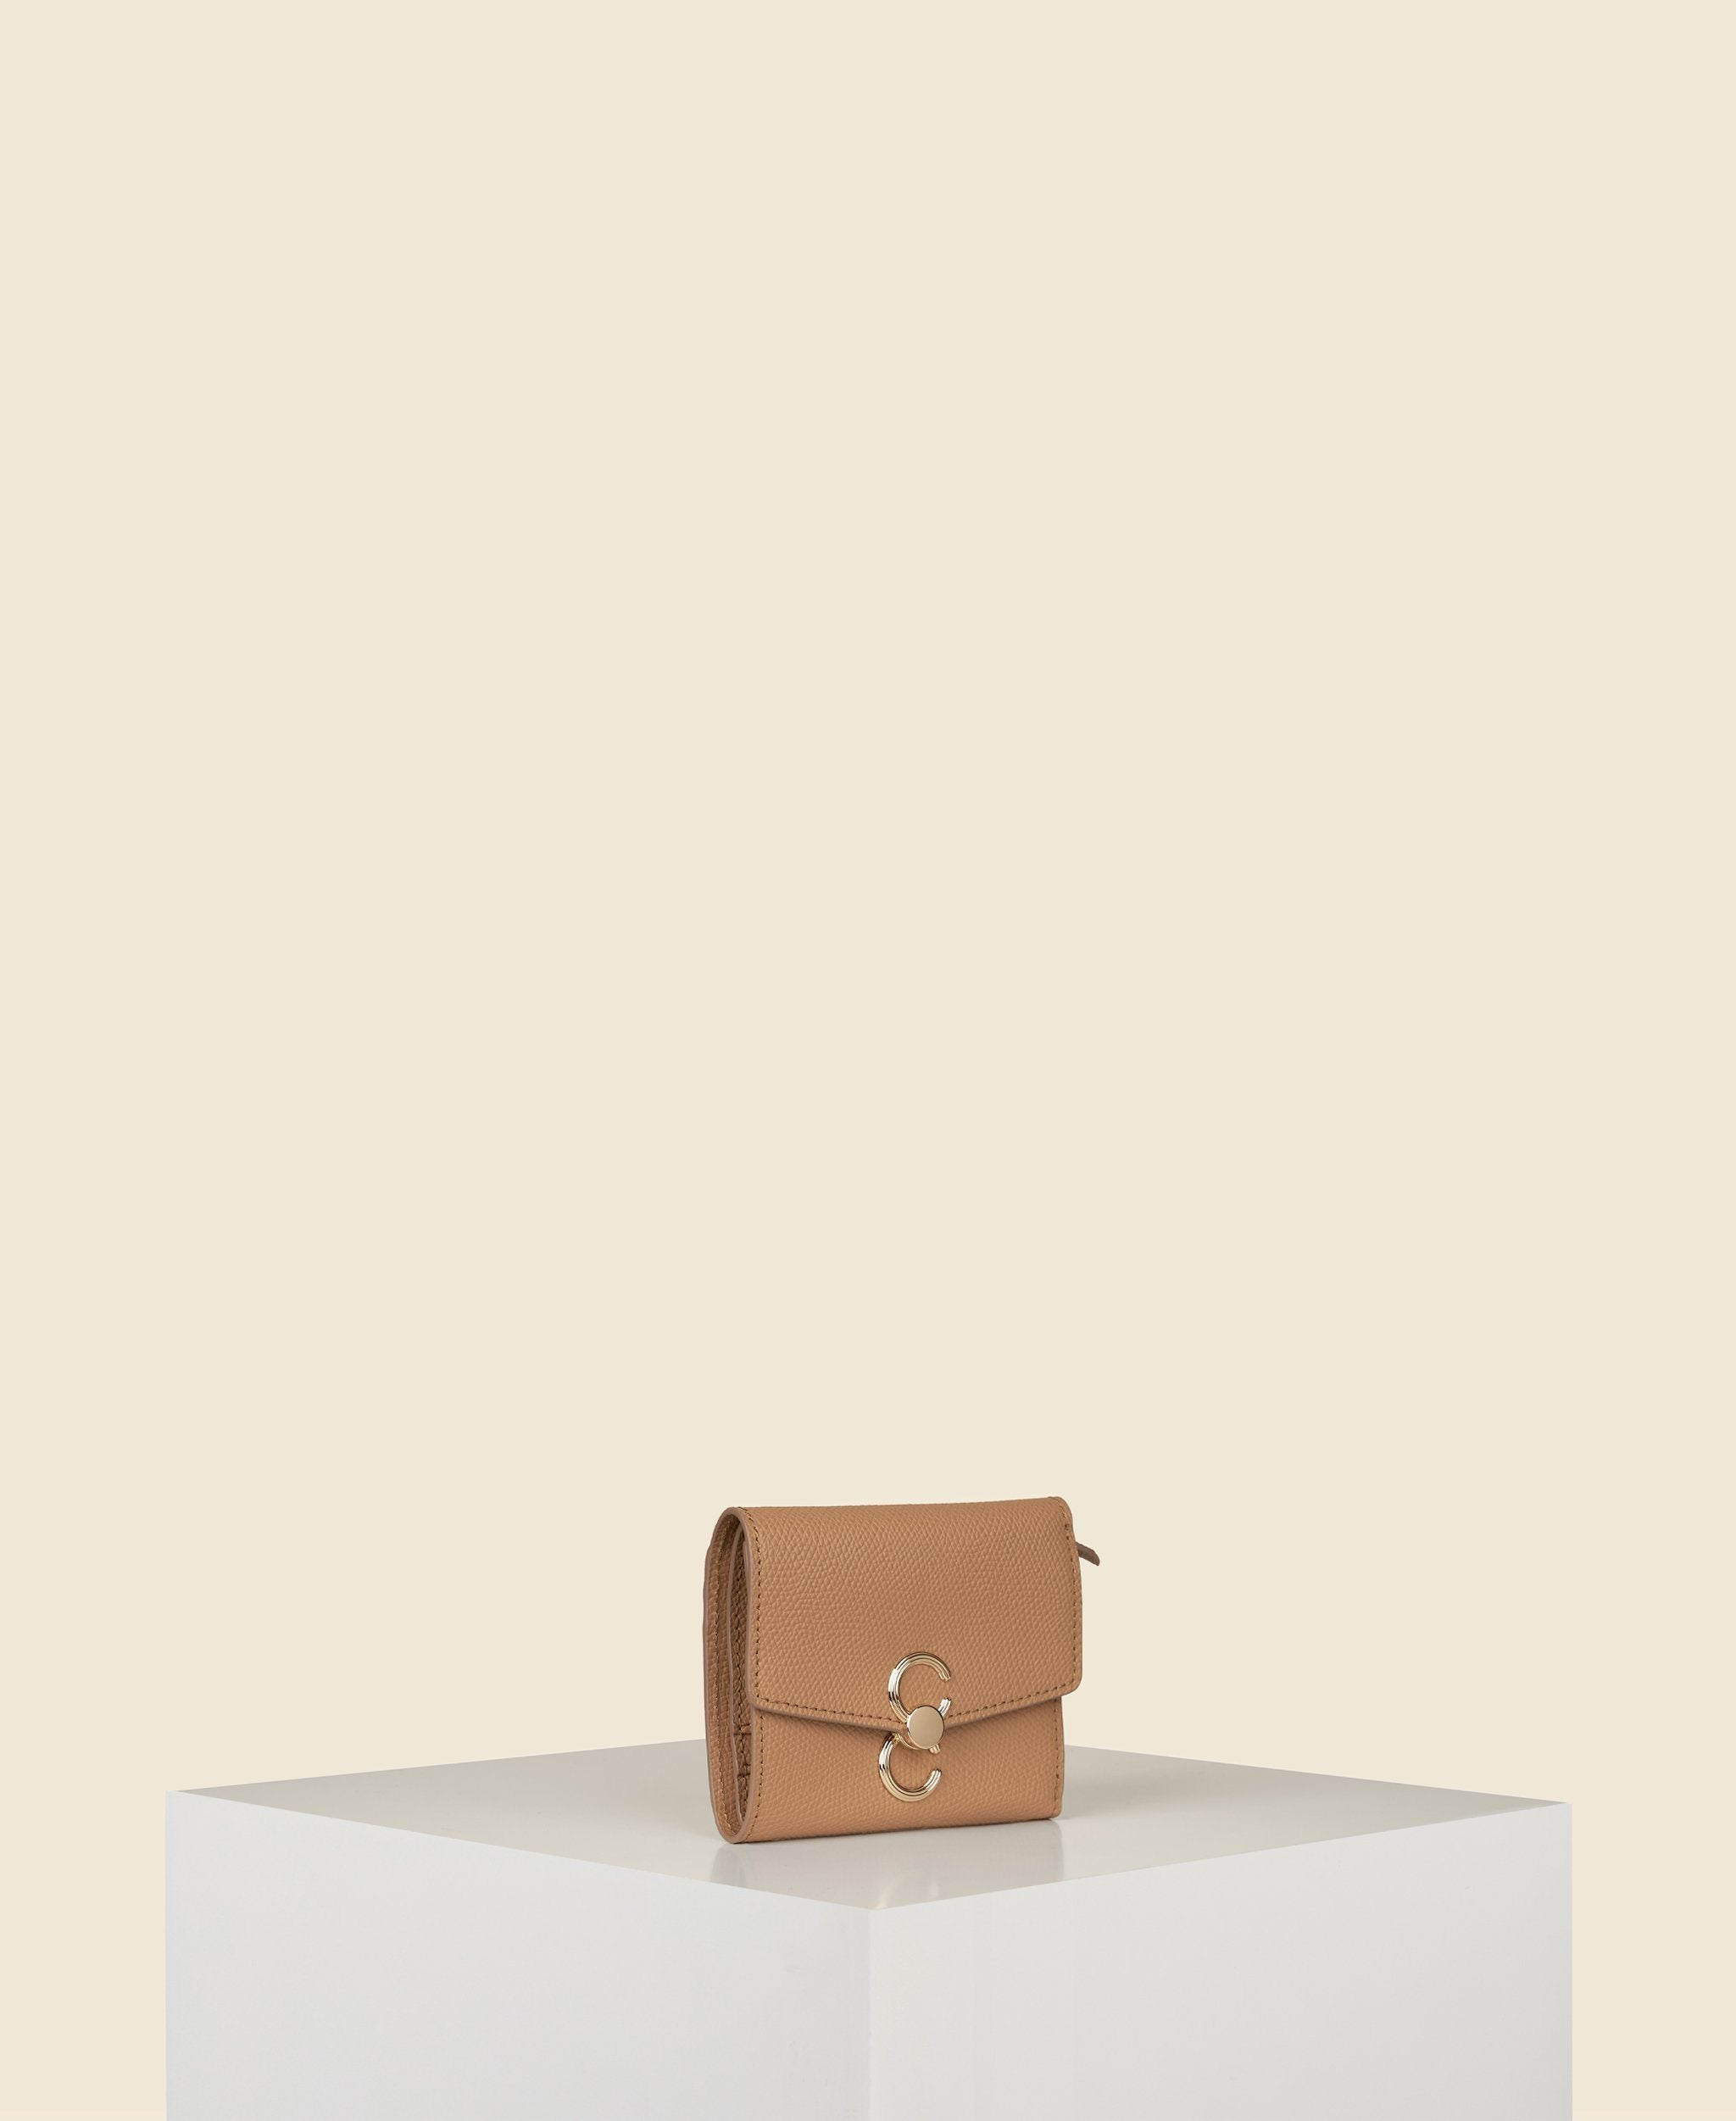 Shop CAFUNE Calfskin Street Style Plain Leather Logo Handbags by PicoJr.